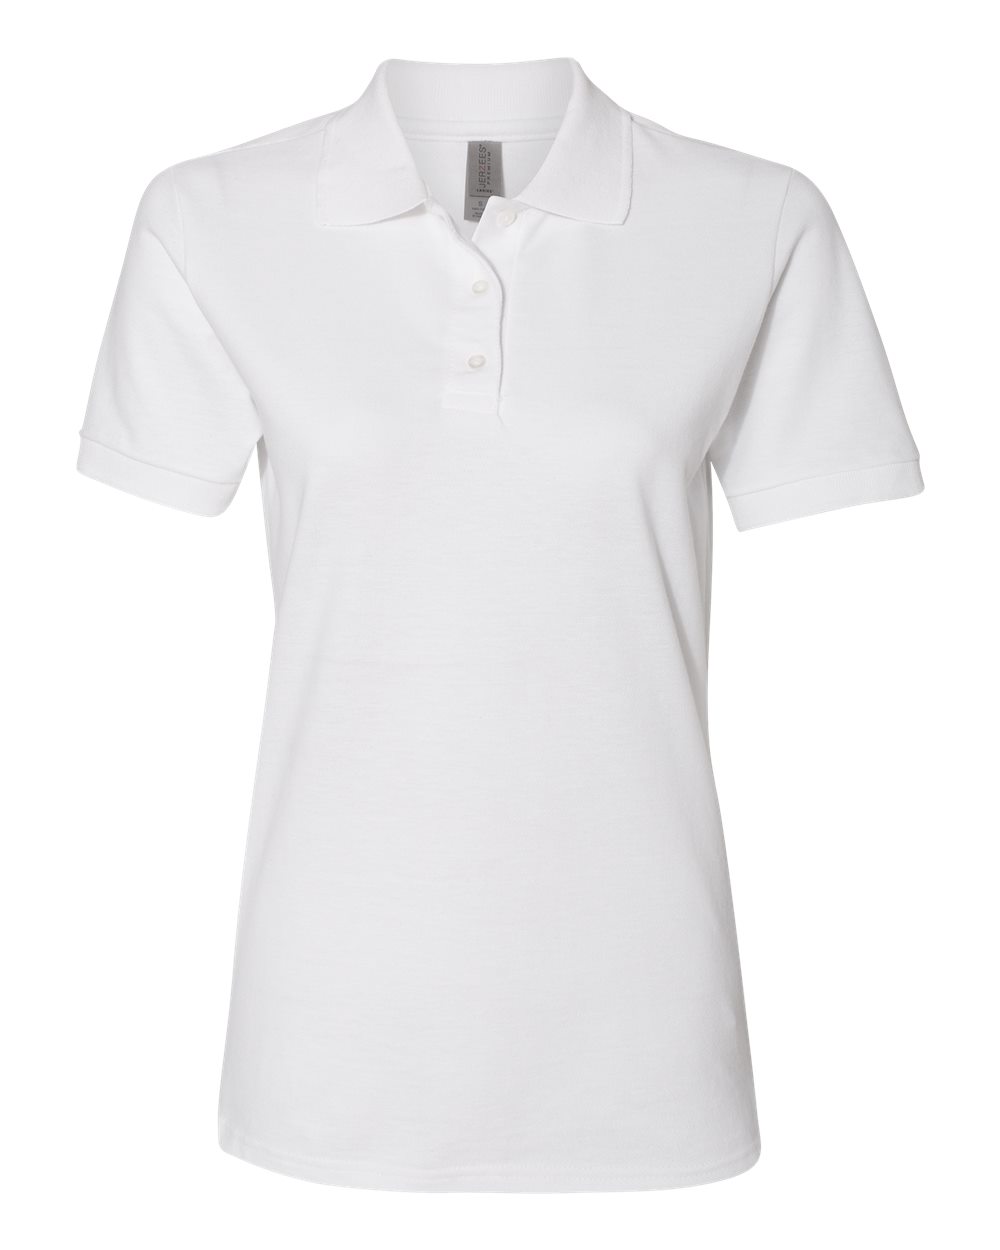 womens tshirts Women's 100% Ringspun Cotton Piqué Polo